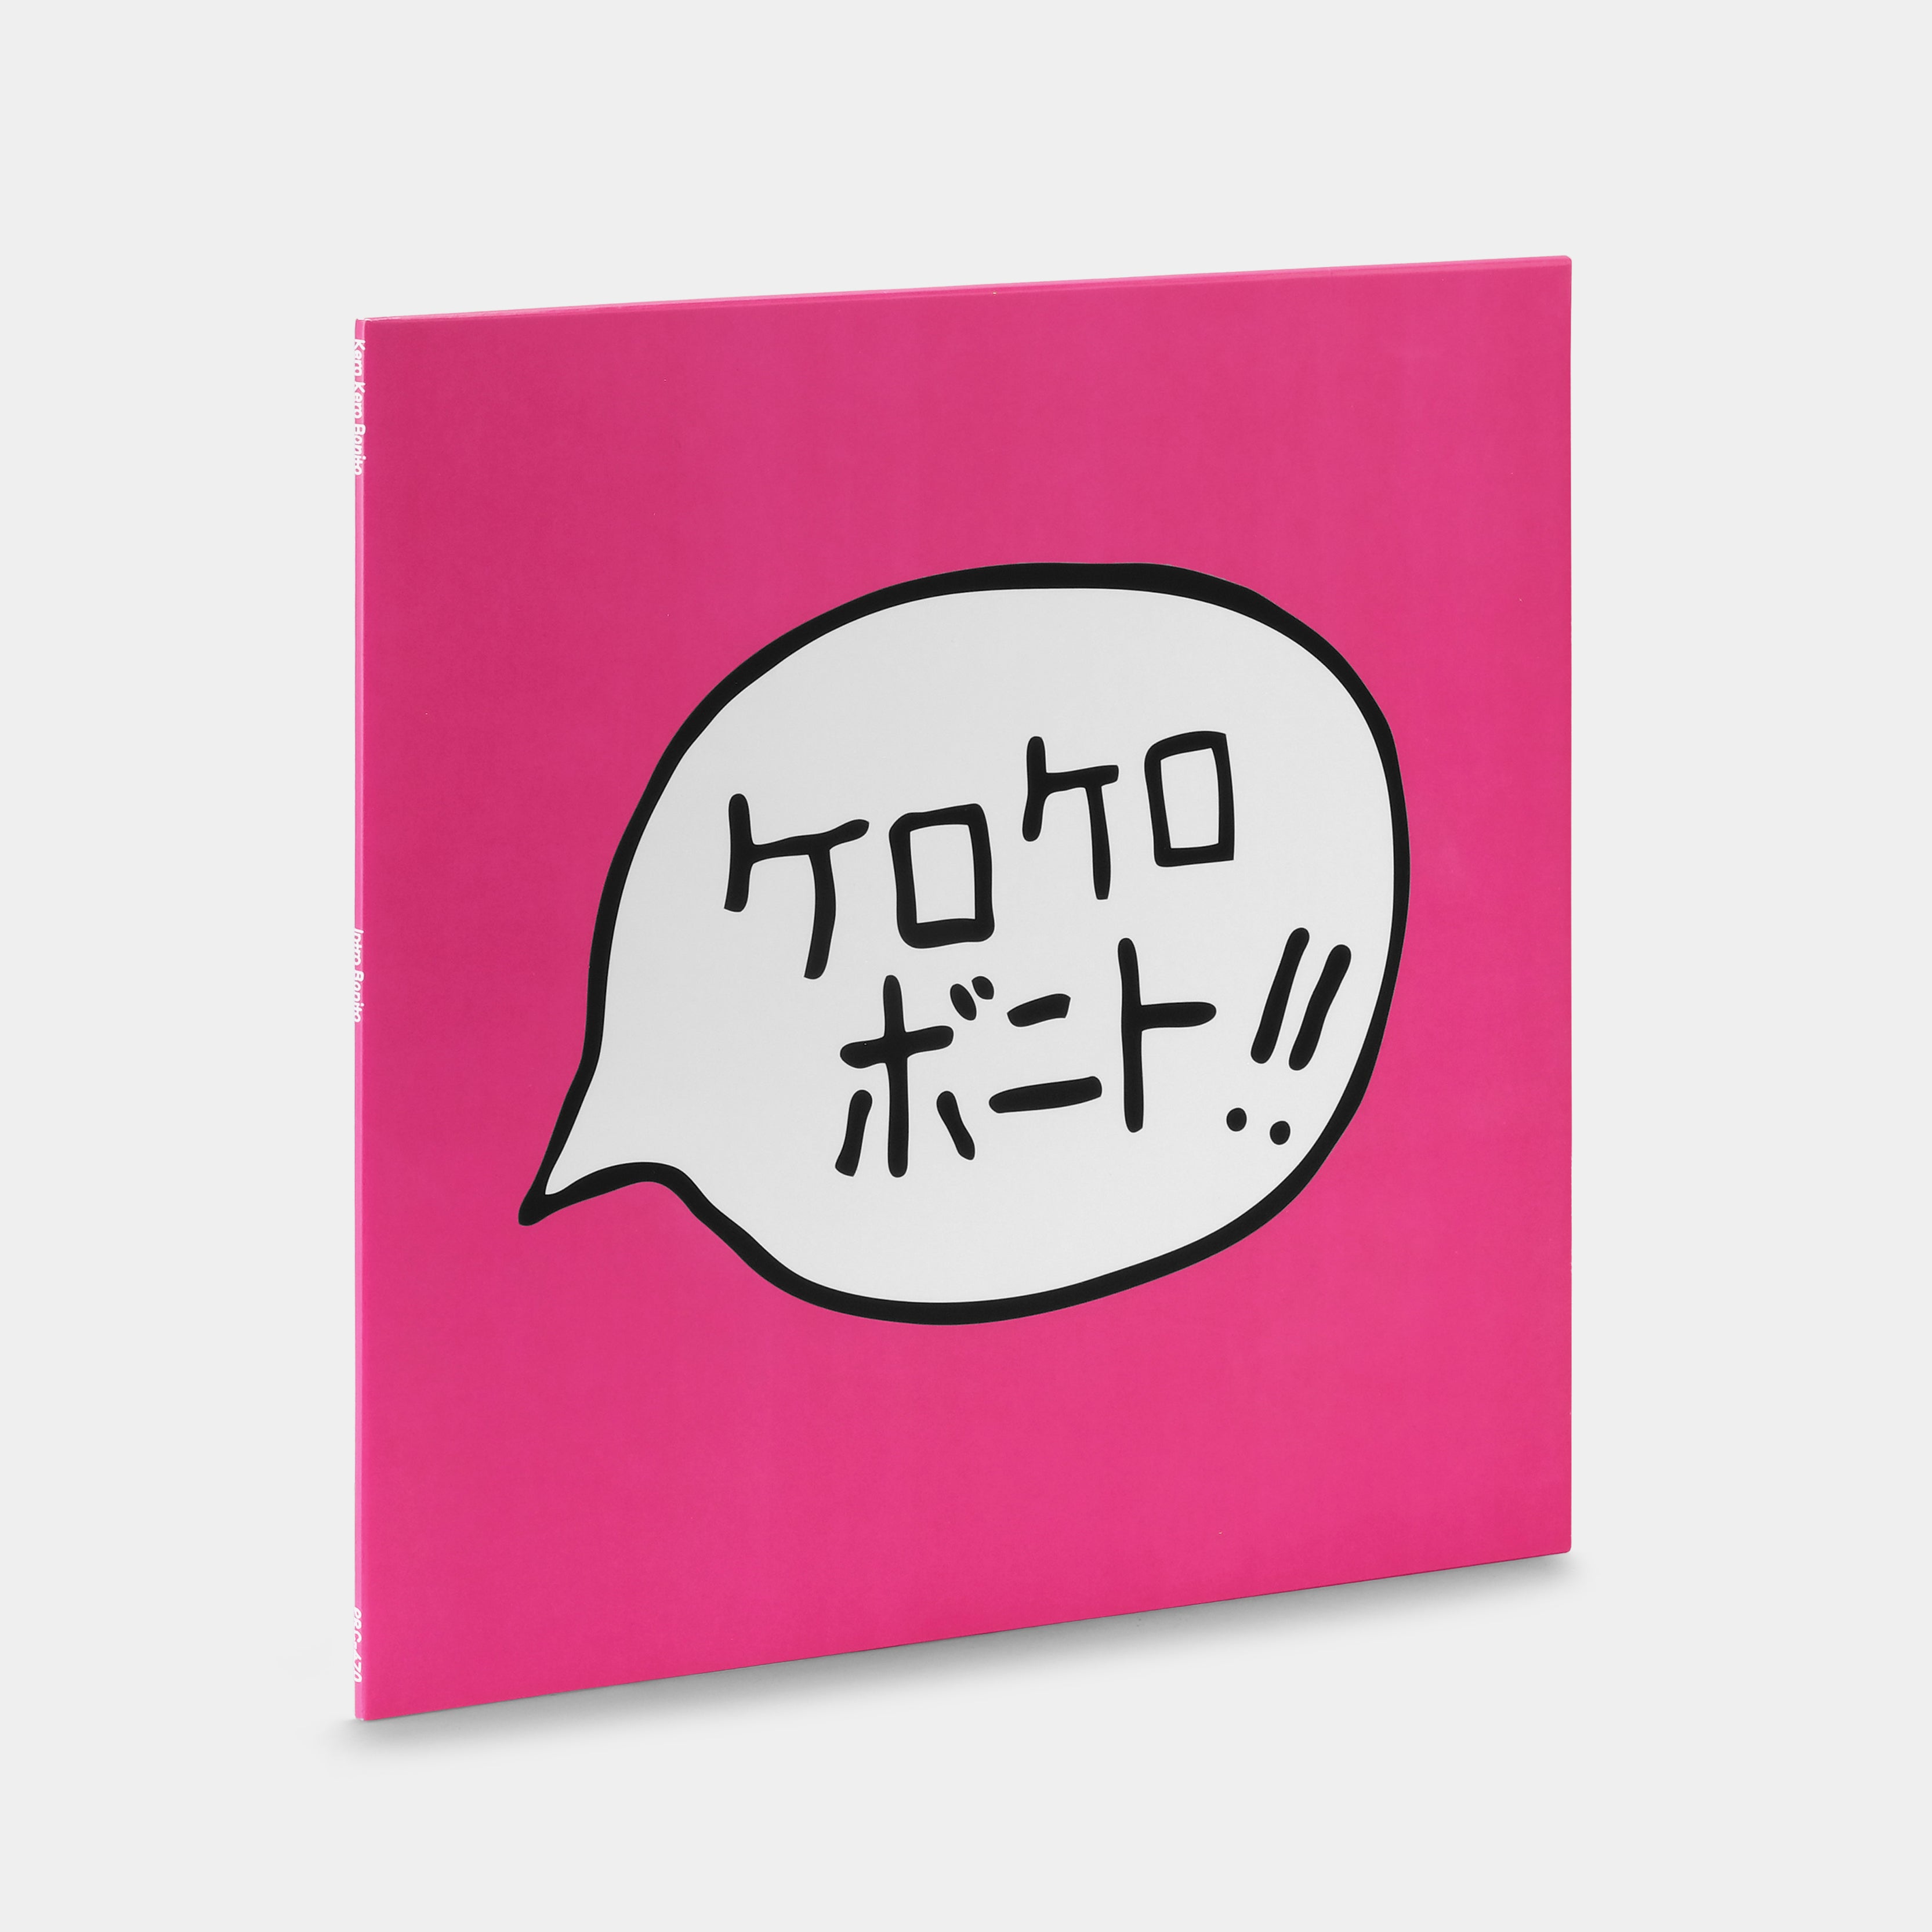 Kero Kero Bonito - Intro Bonito LP Hot Pink Vinyl Record